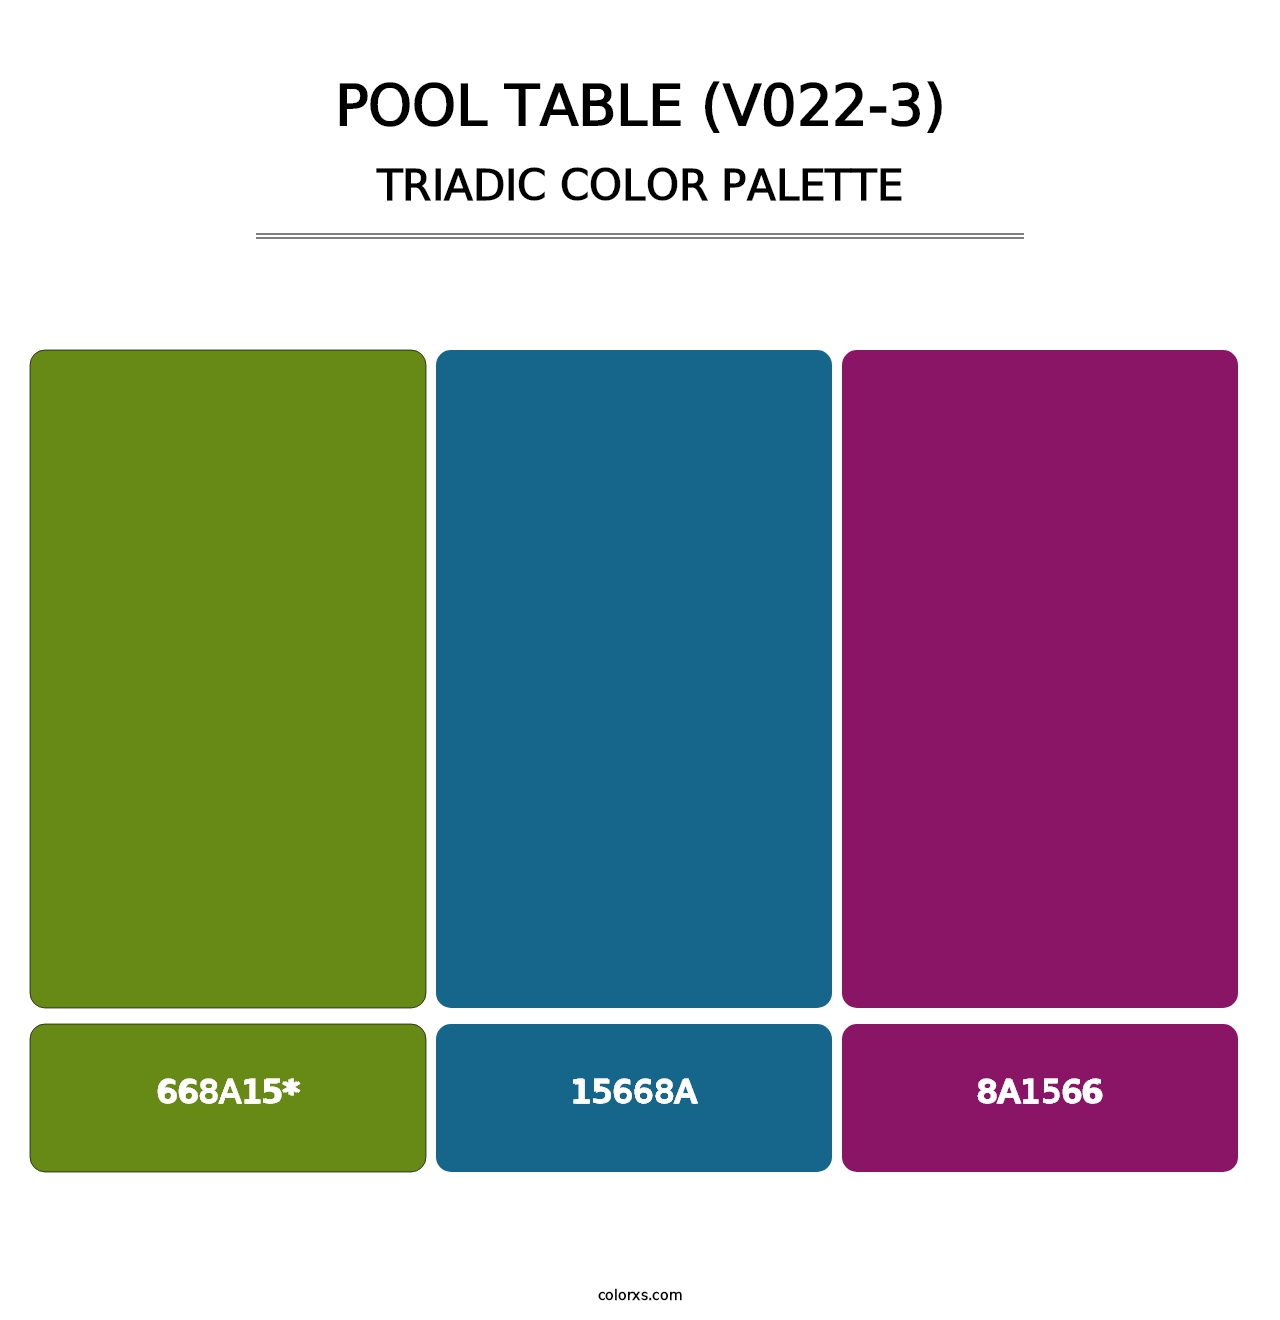 Pool Table (V022-3) - Triadic Color Palette